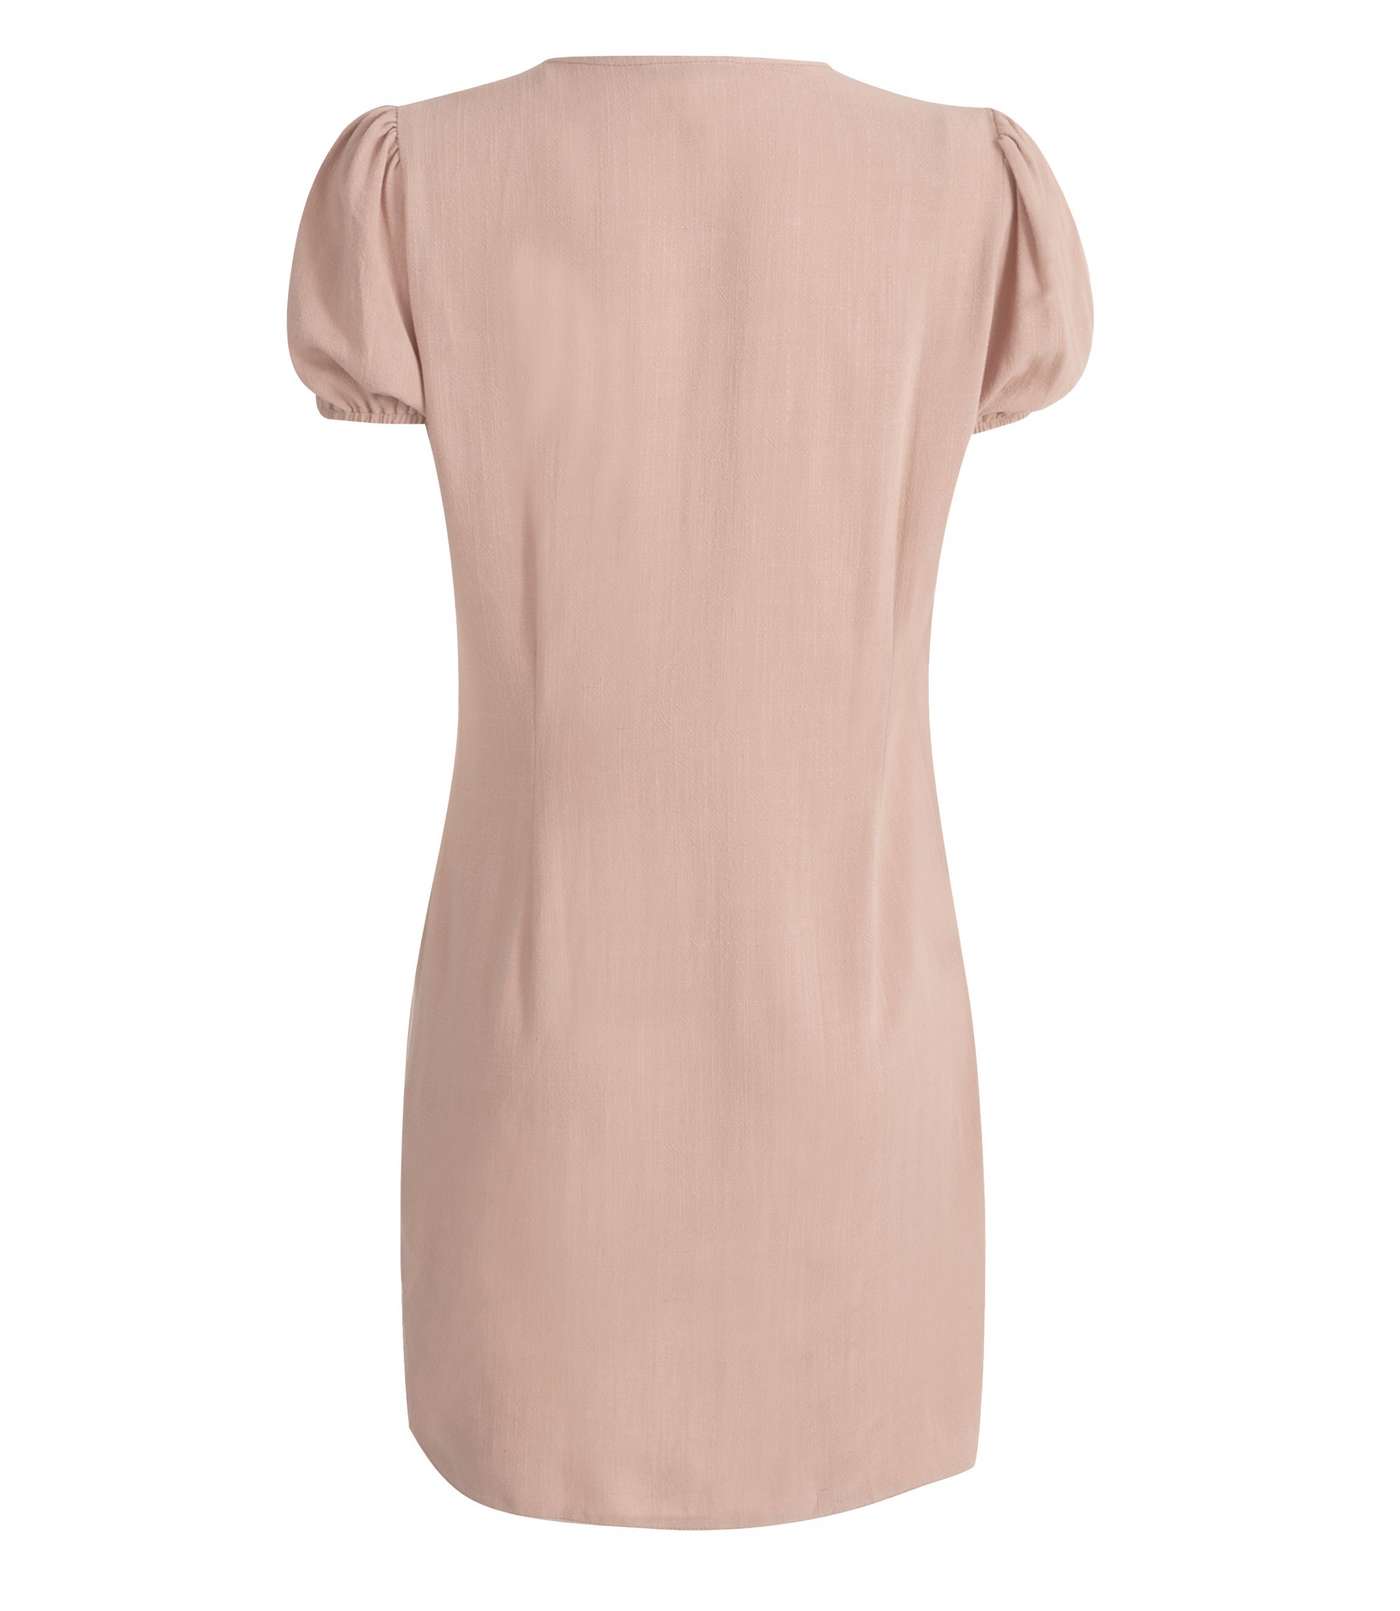 Pale Pink Linen Look Button Up Tea Dress Image 2